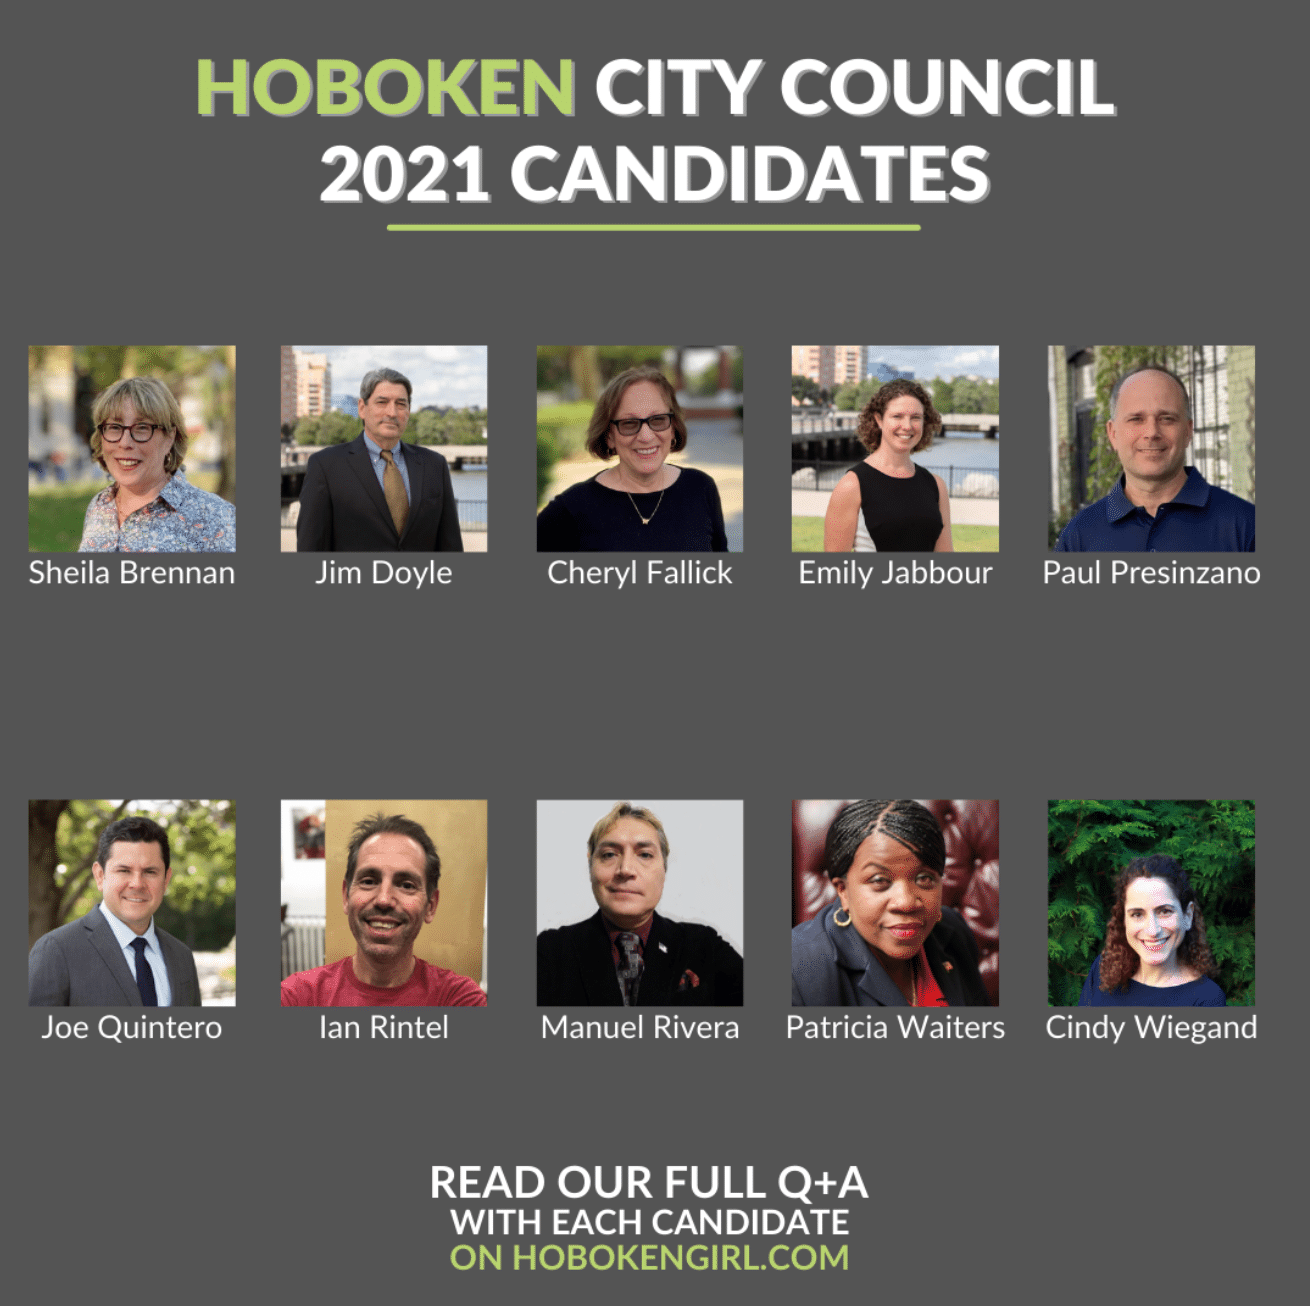 hoboken city souncil candidates 2021.